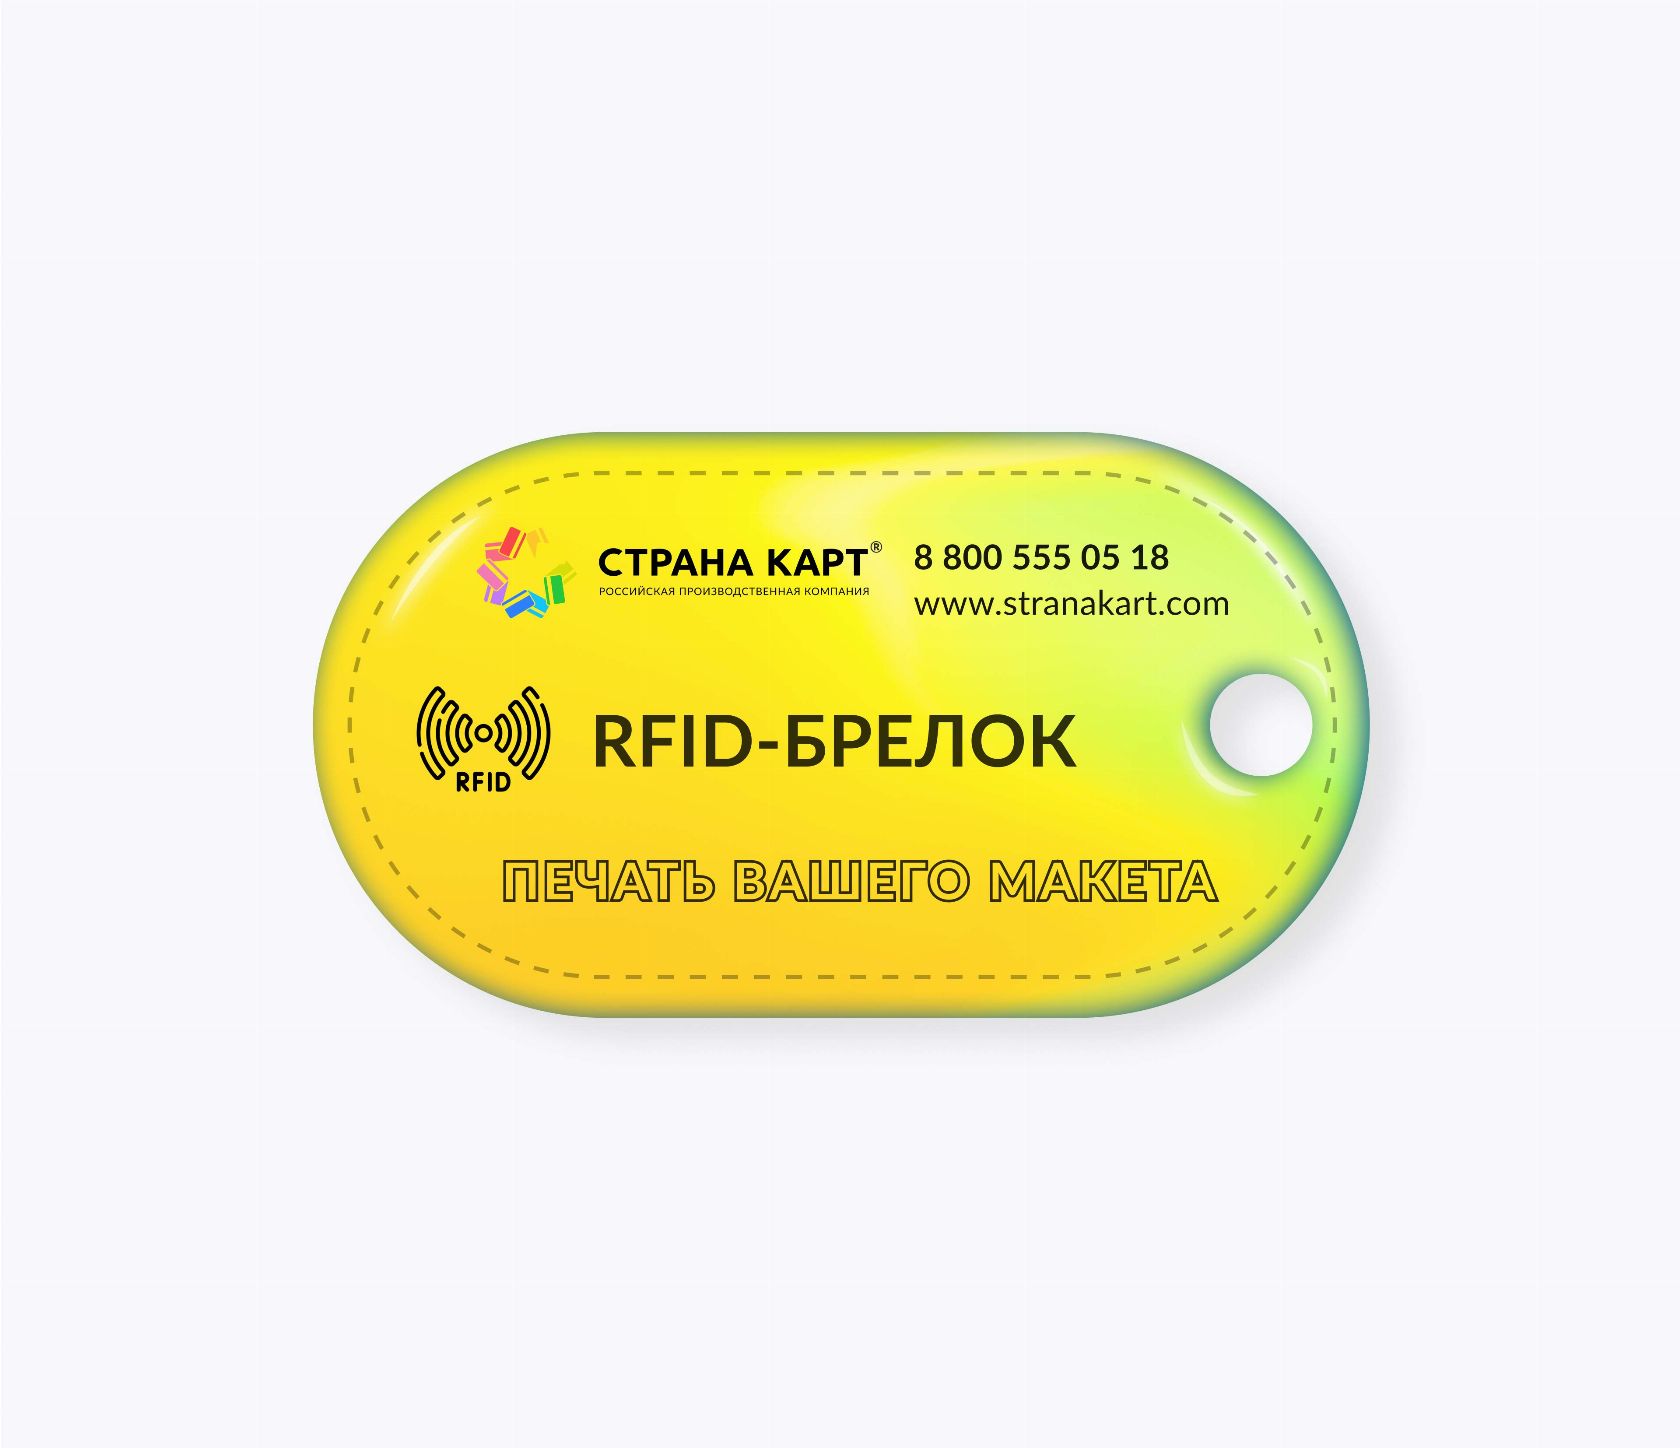 Овальные RFID-брелоки NEOKEY® с чипом NXP MIFARE Ultralight 7 byte UID RFID-брелоки NEOKEY® с чипом NXP MIFARE Ultralight 7 byte UID и вашим логотипом